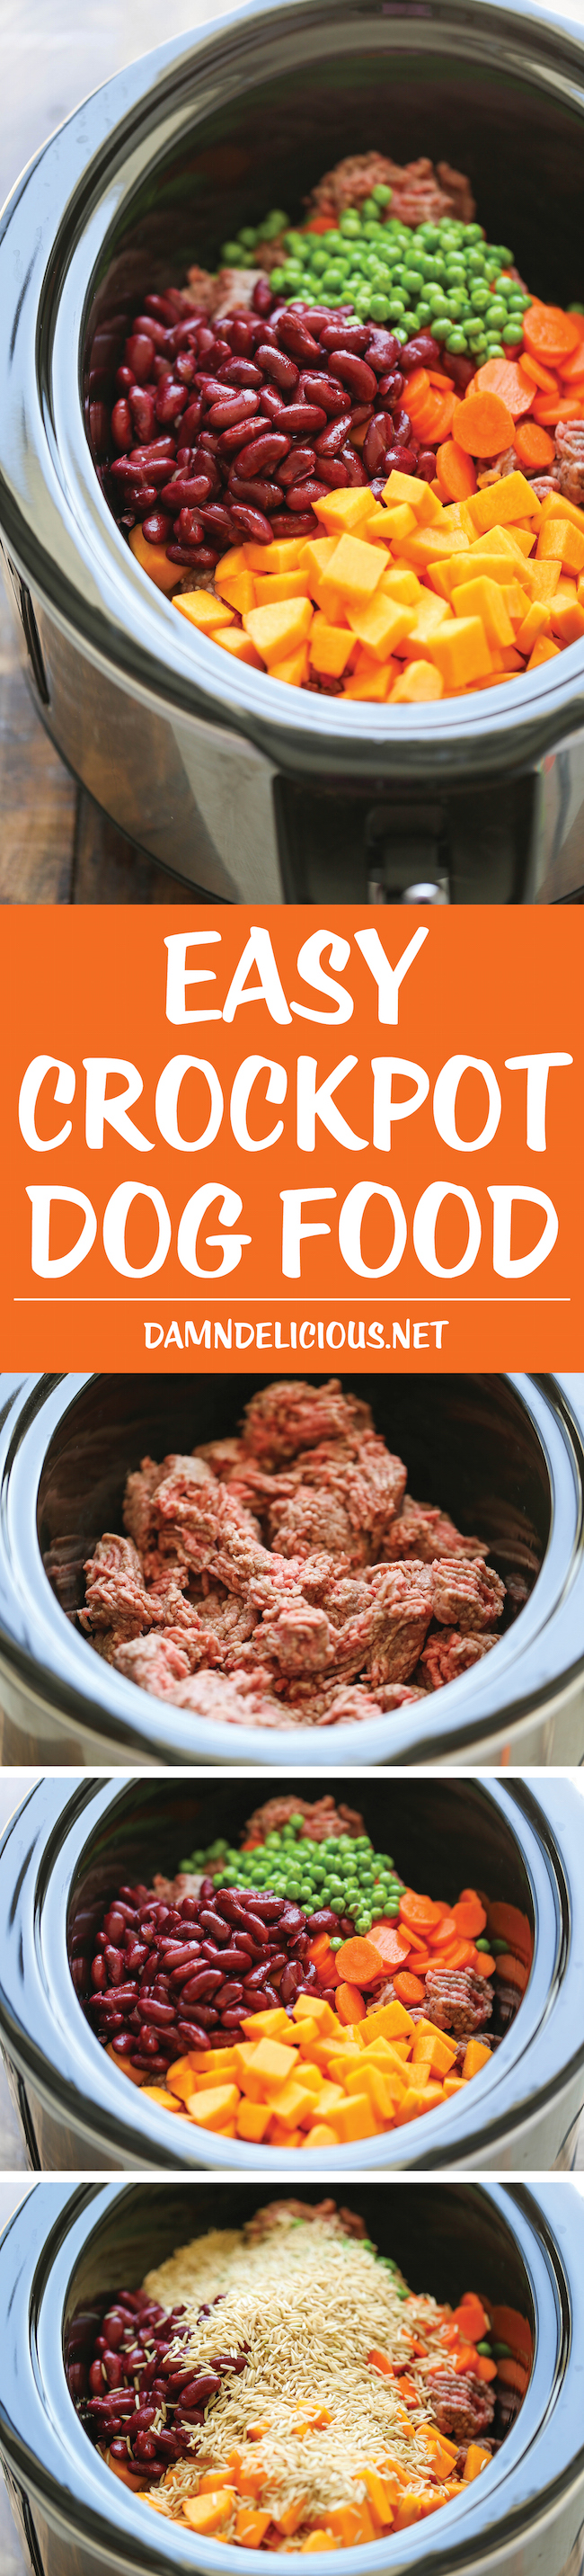 Easy Crockpot Dog Food - Damn Delicious